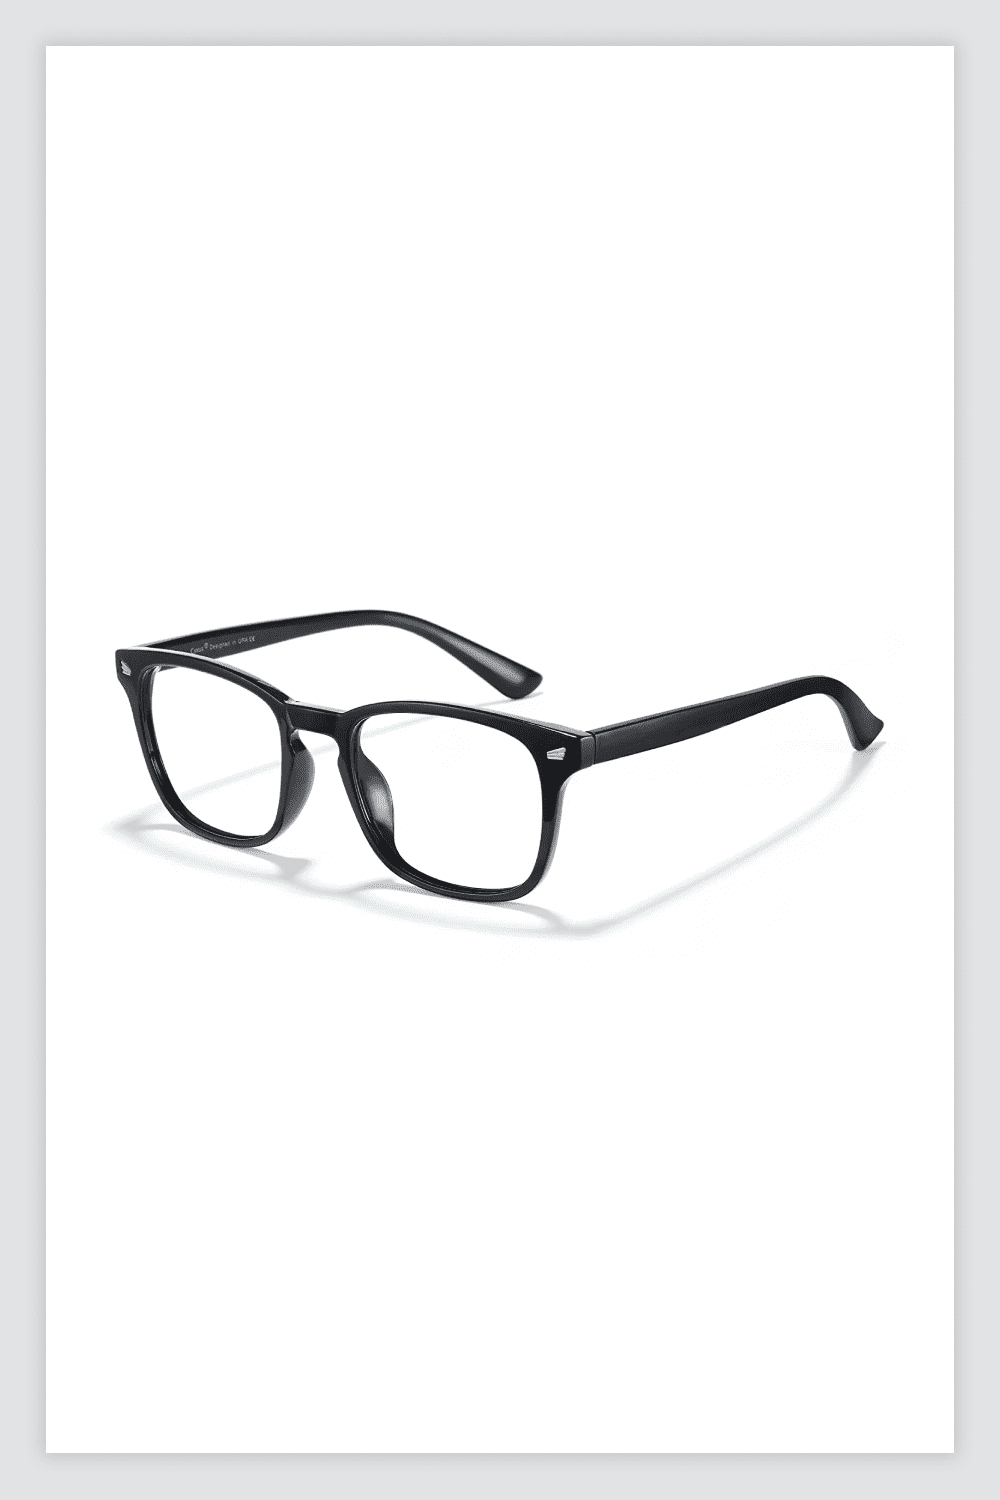 Black glasses on the white background.